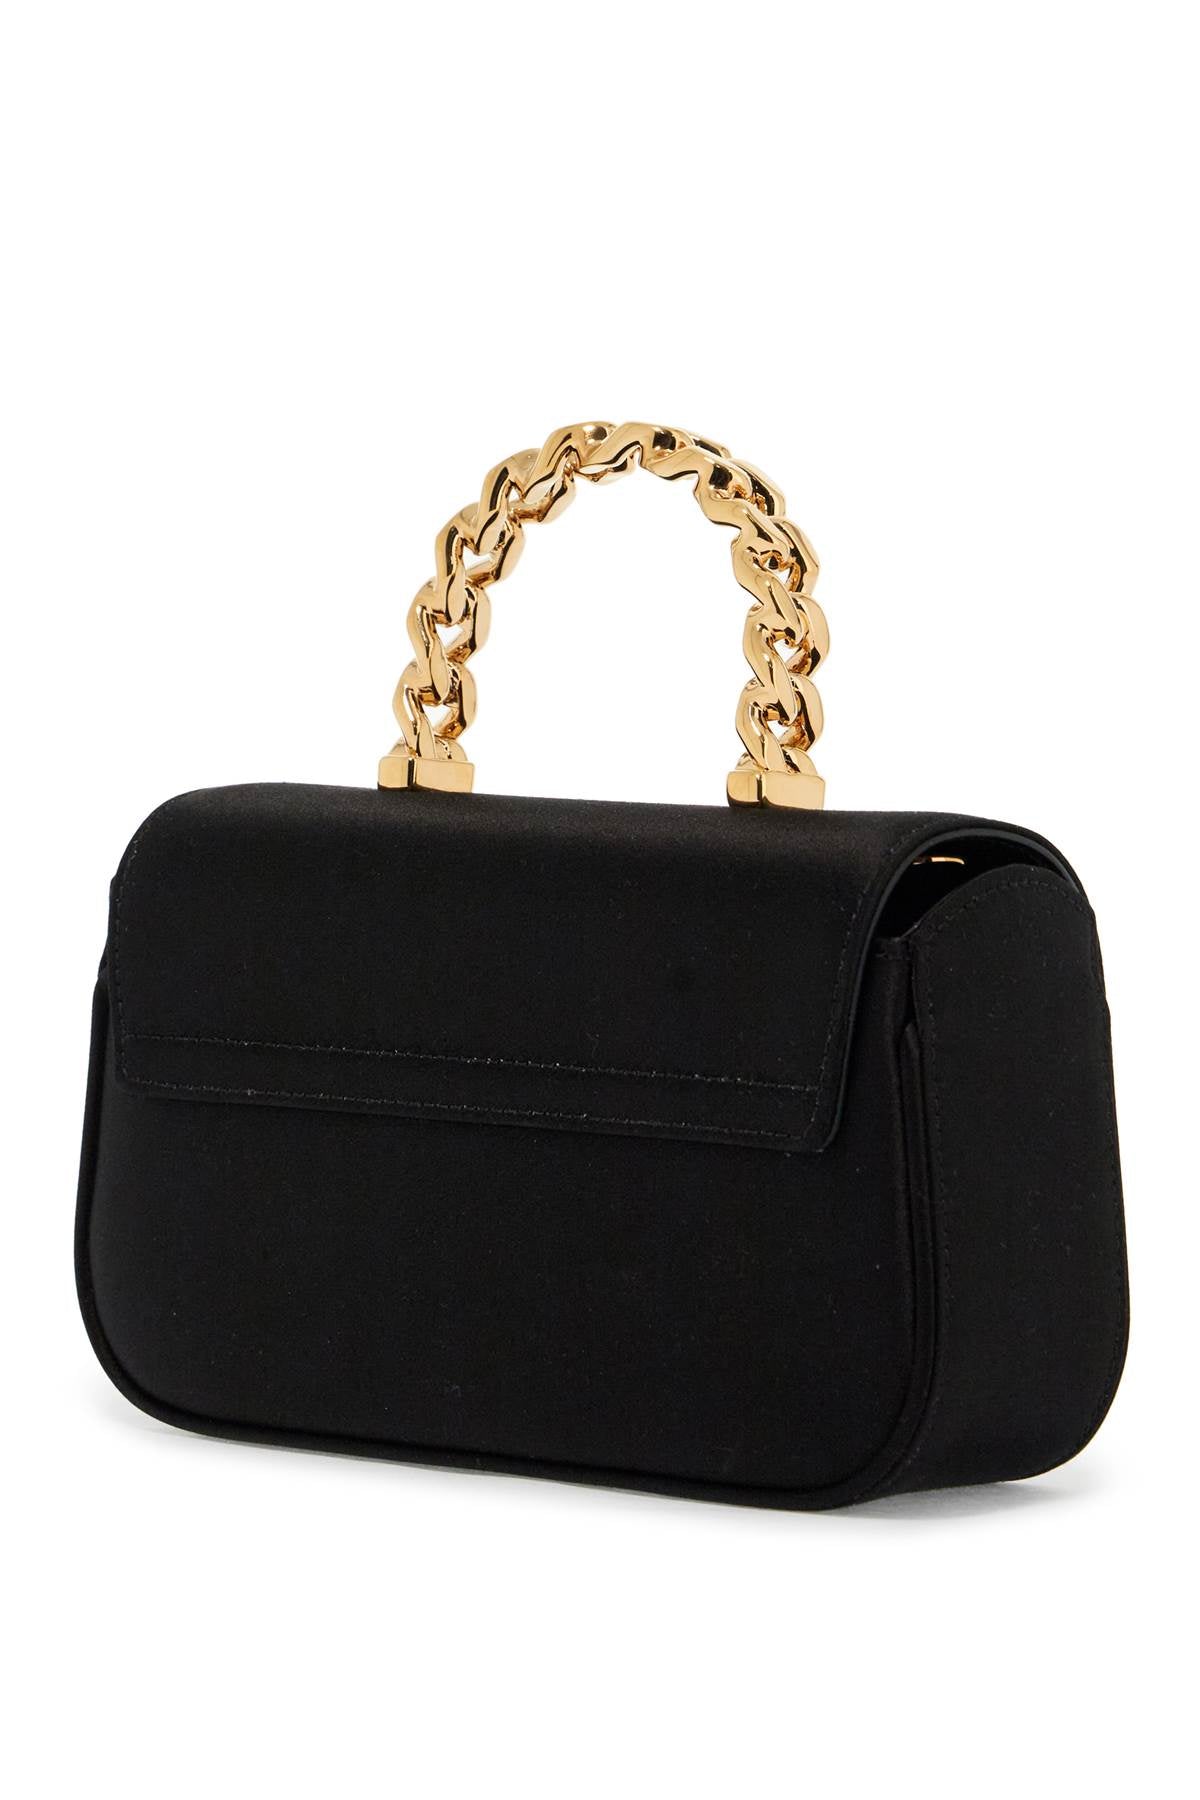 Versace mini satin bag with medusa design - Black